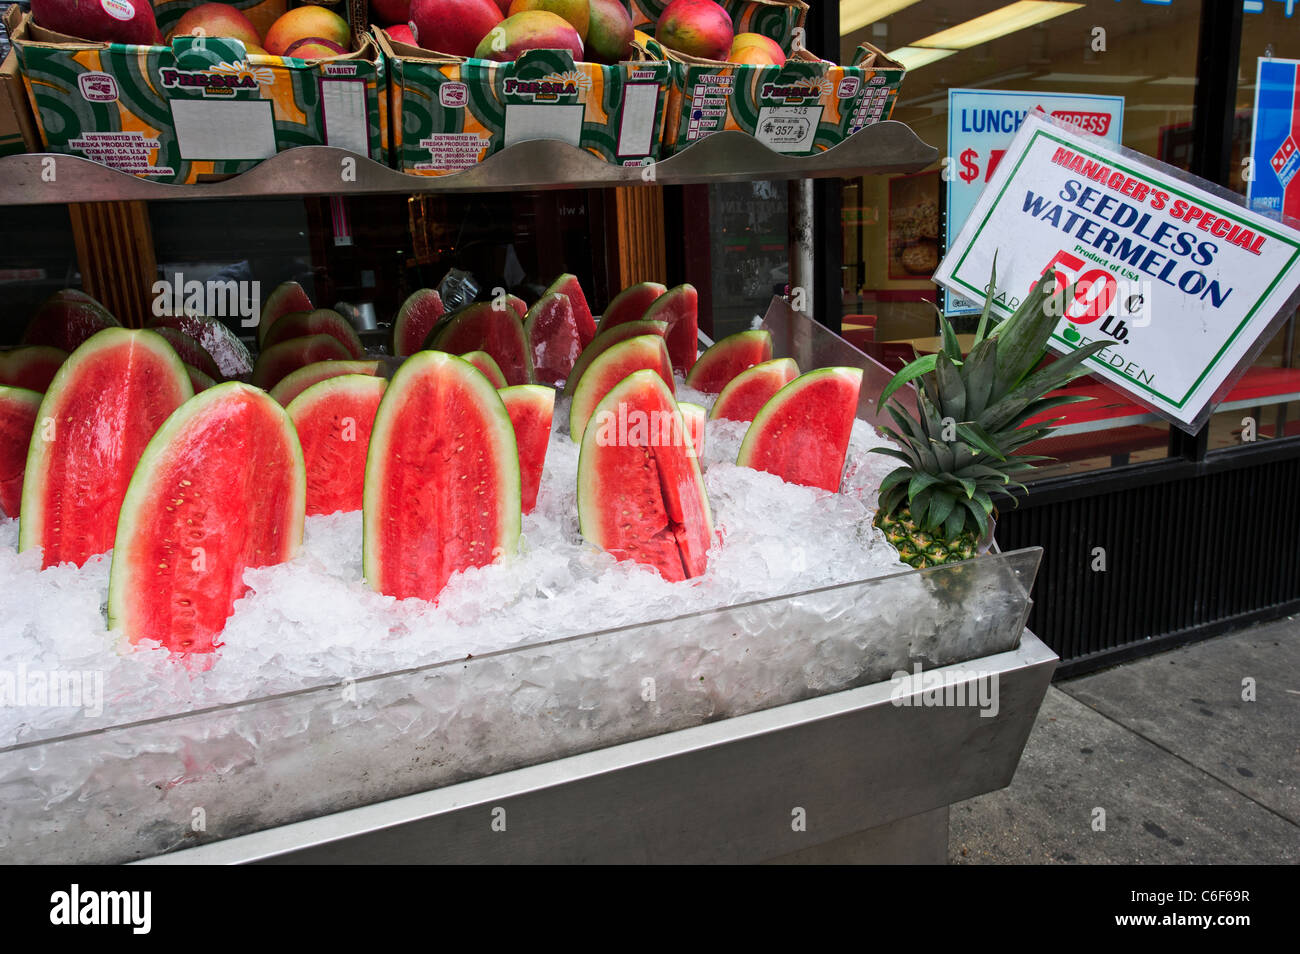 Watermelon on sale, New York, United States. Stock Photo